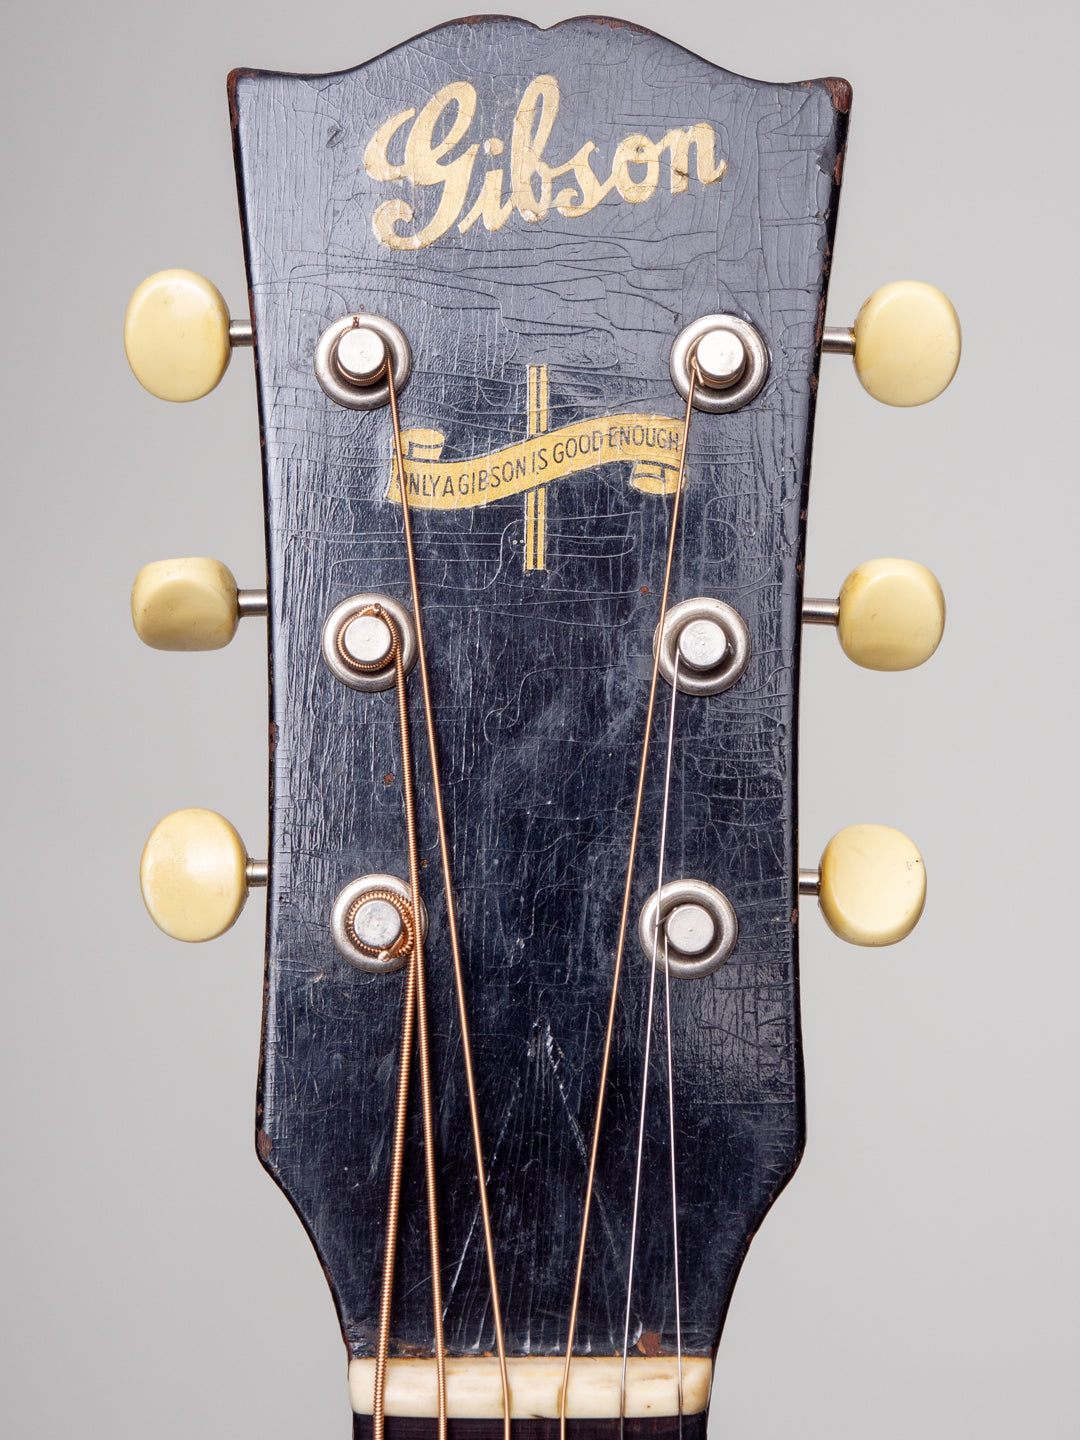 1943 Gibson LG-2